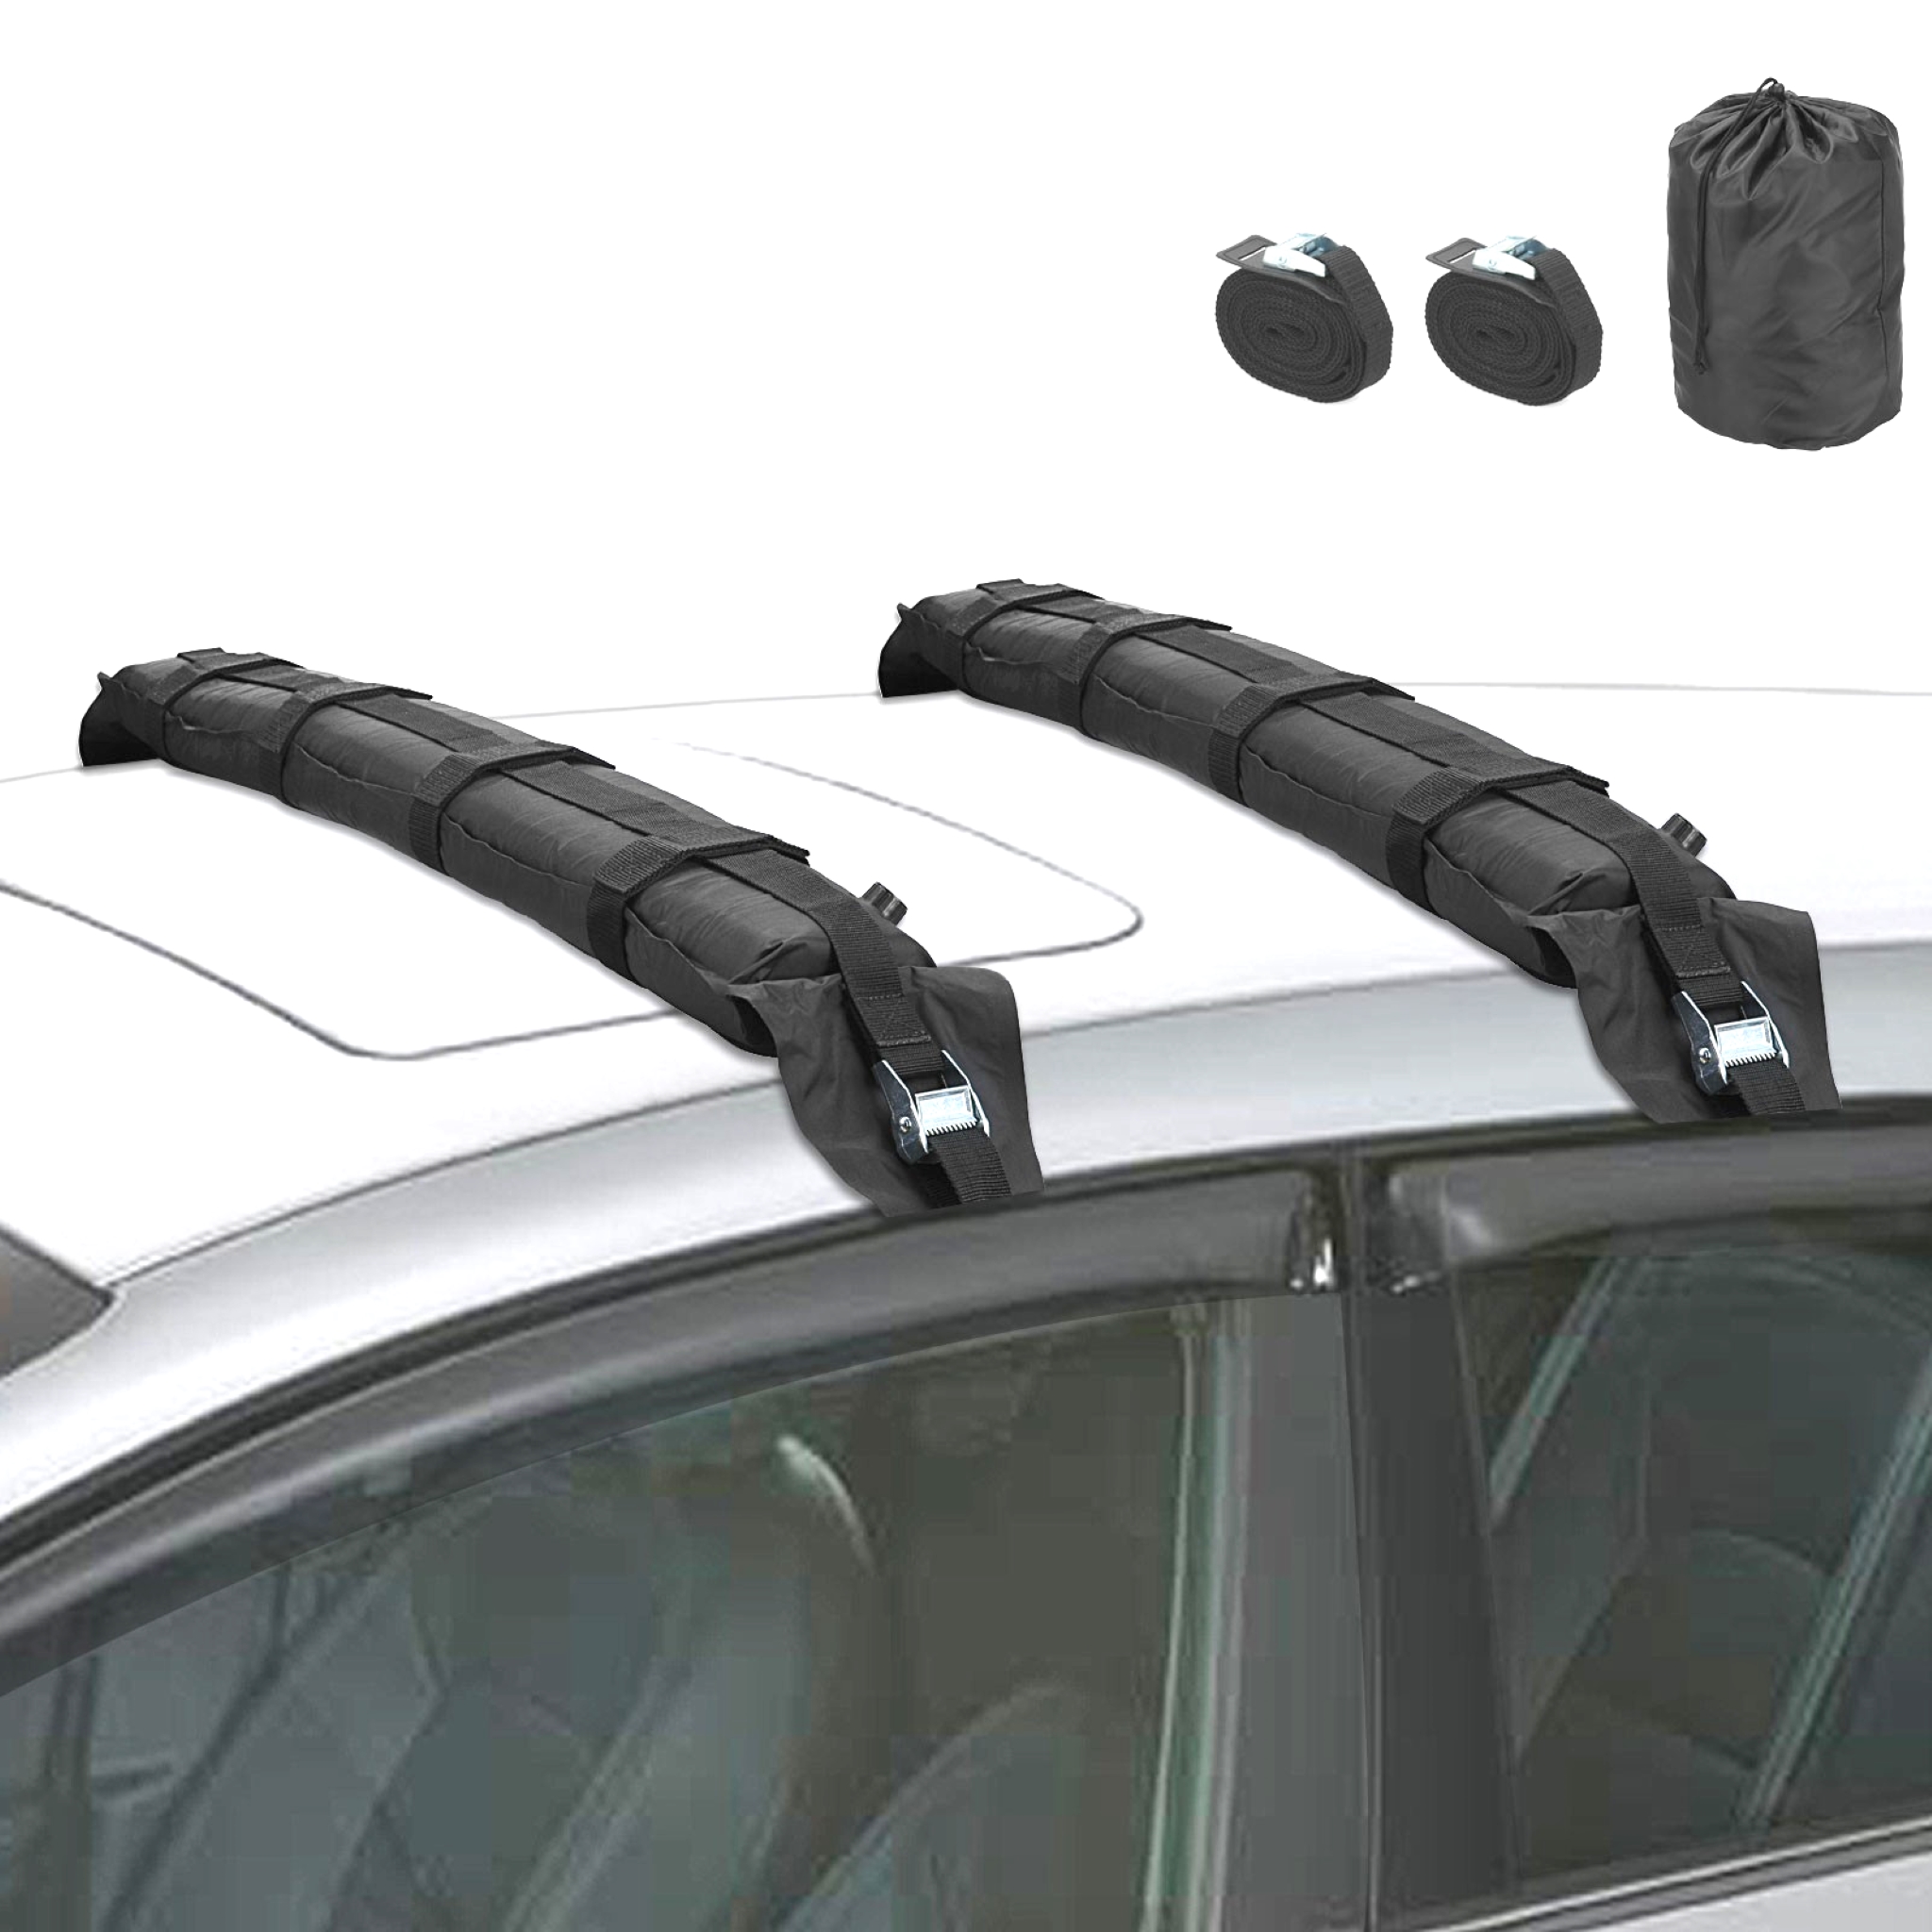 Soft Roof Rack Pads,Universal Car Soft Roof Rack Pad for Kayak